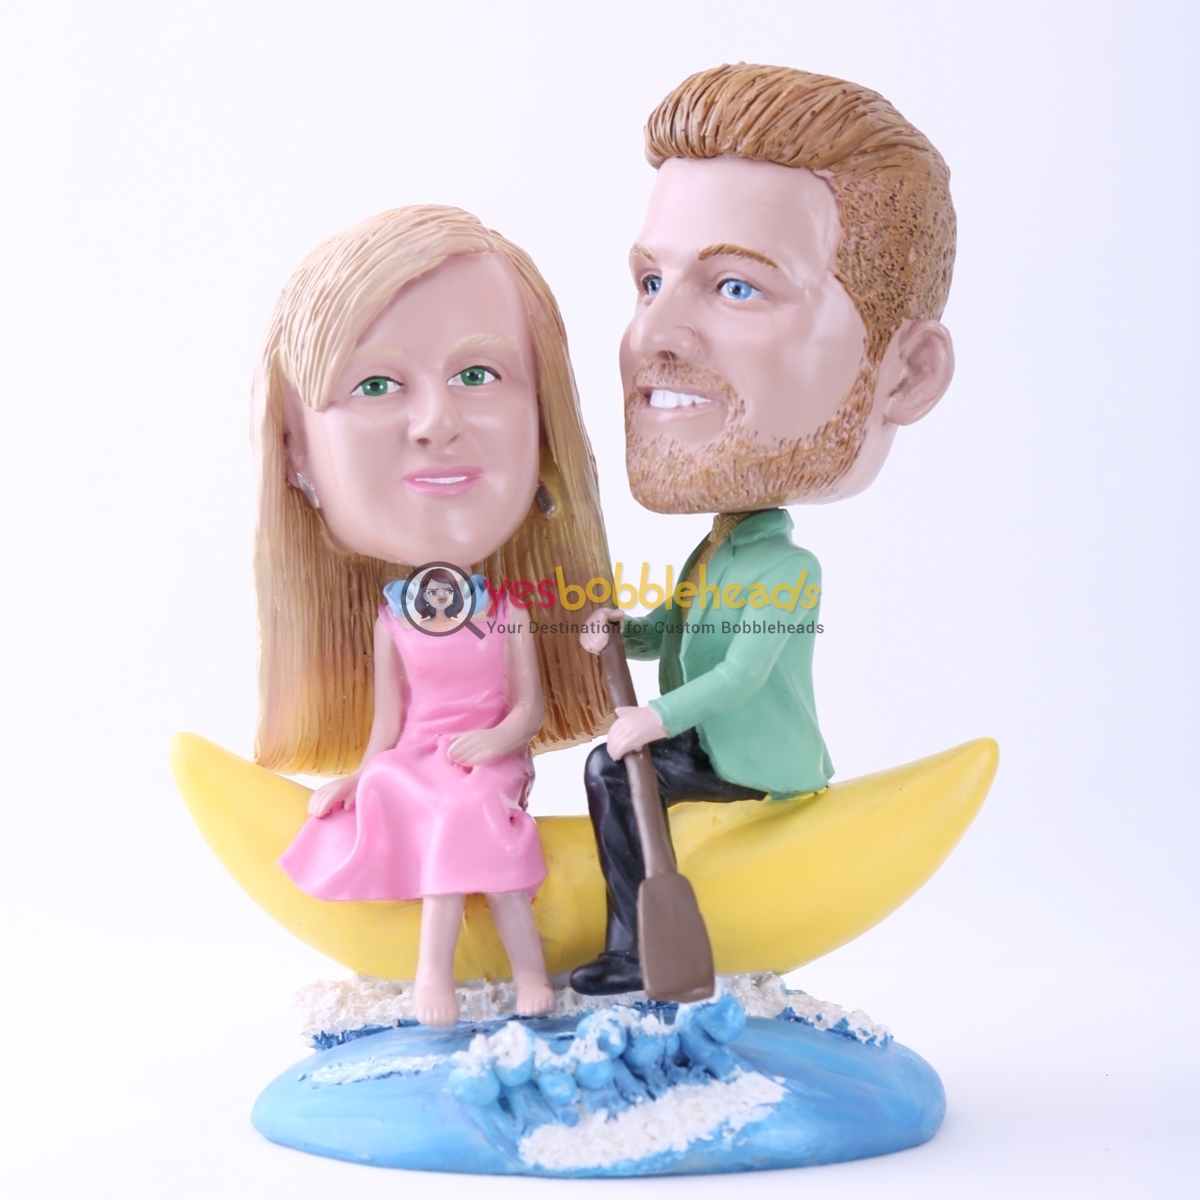 Picture of Custom Bobblehead Doll: Couple on Banana Boat